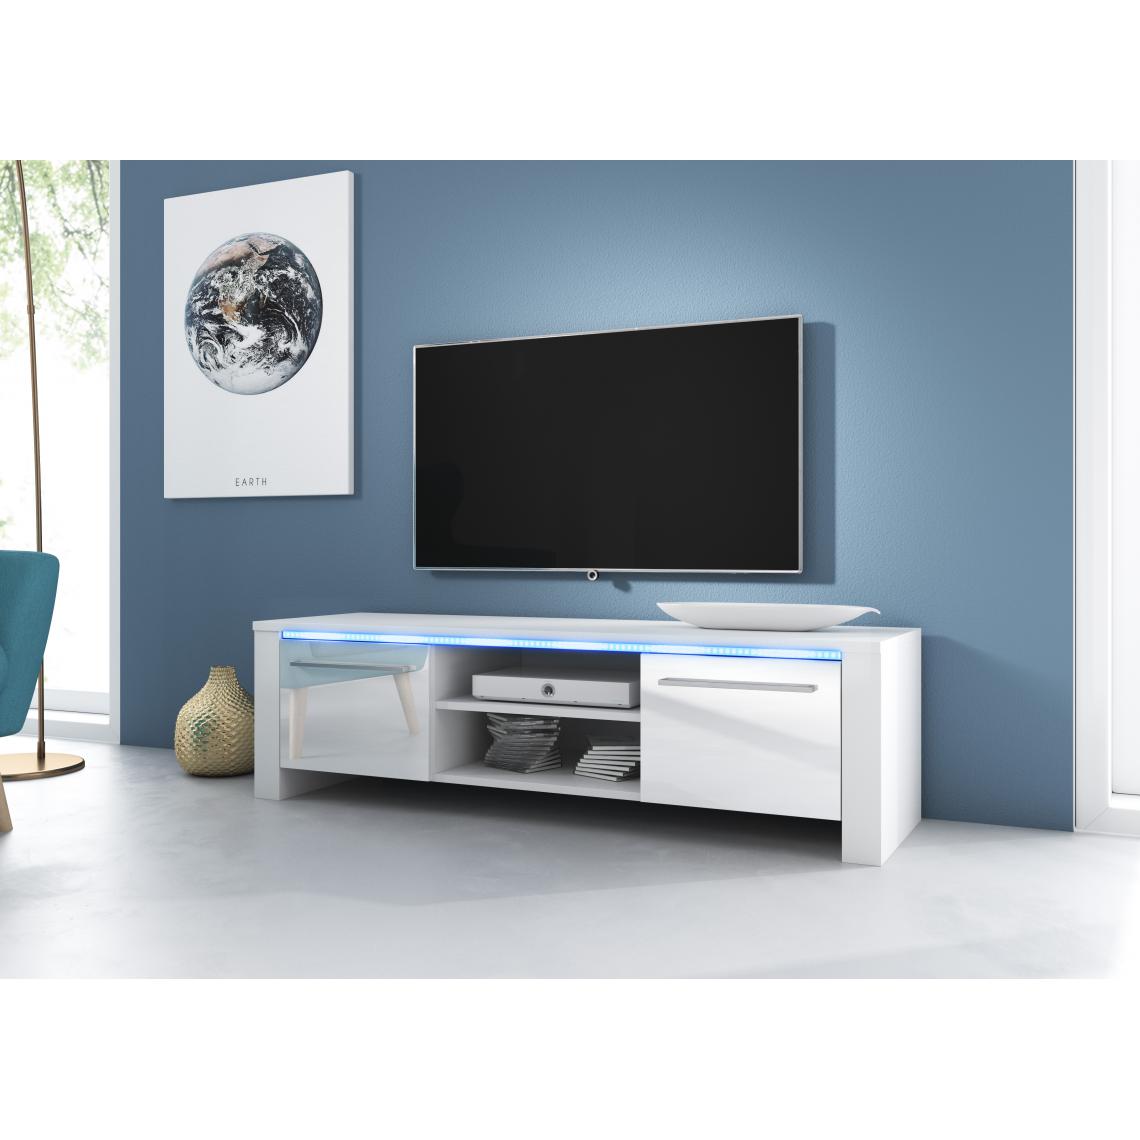 3xeliving - Moderner TV-Ständer Canaris weiß / weiß glänzende 140cm LED - Meubles TV, Hi-Fi